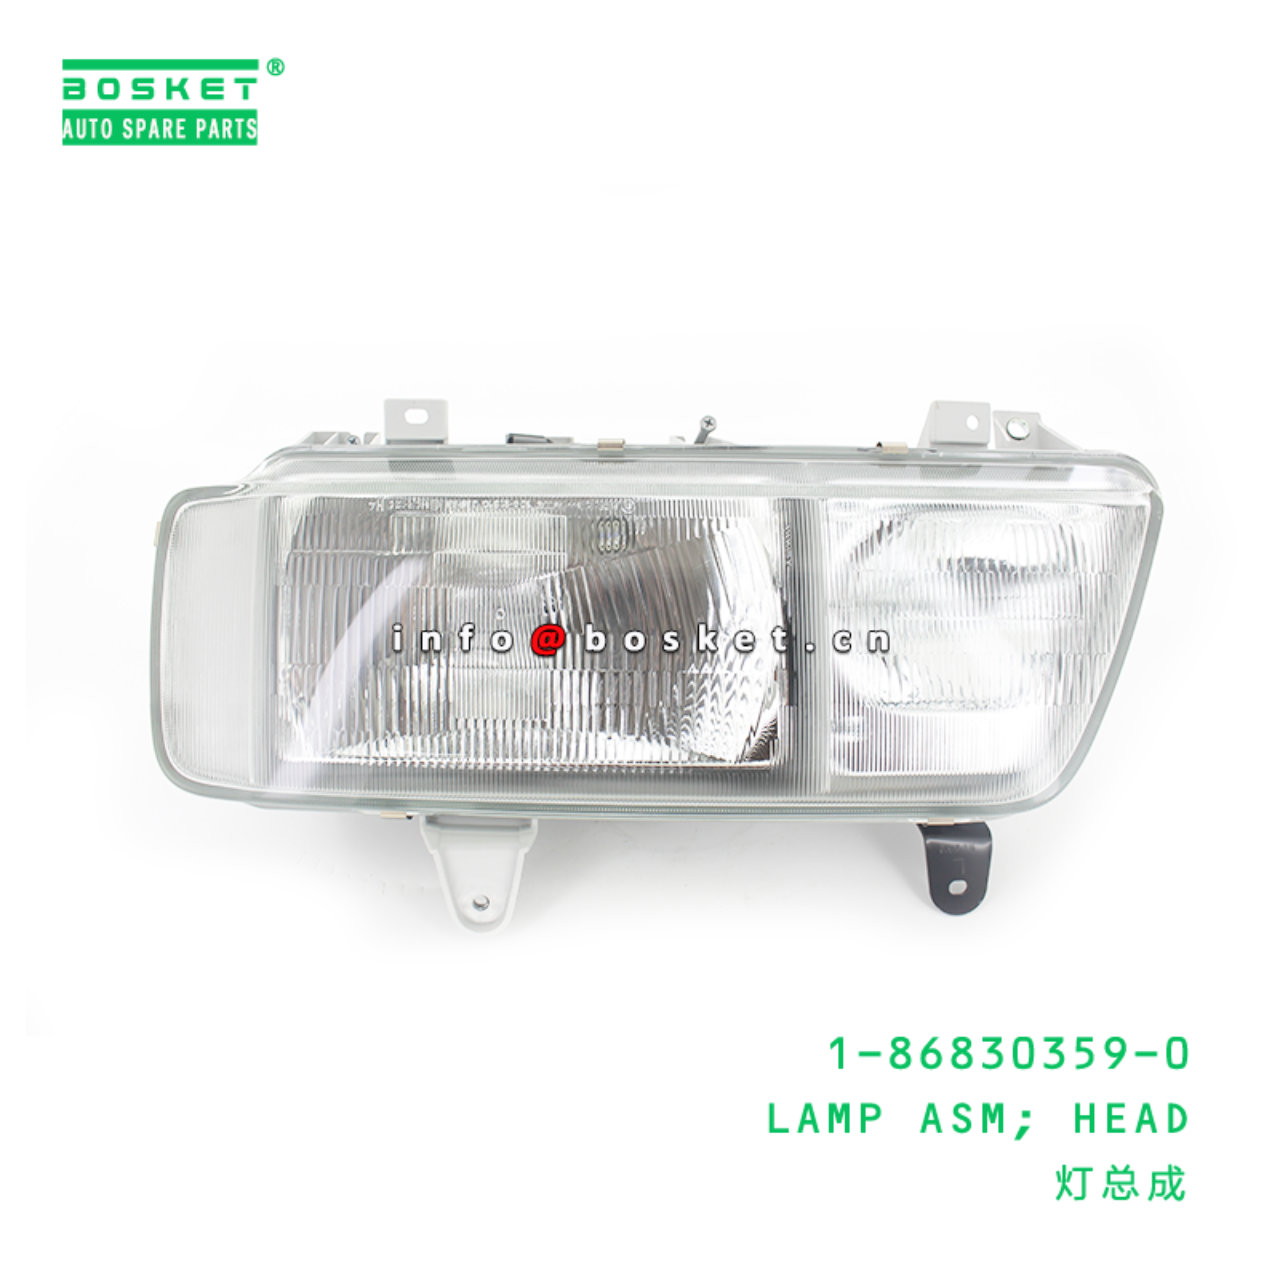 1-86830359-0 Head Lamp Assembly Suitable for ISUZU ESR FRR FSR 1868303590